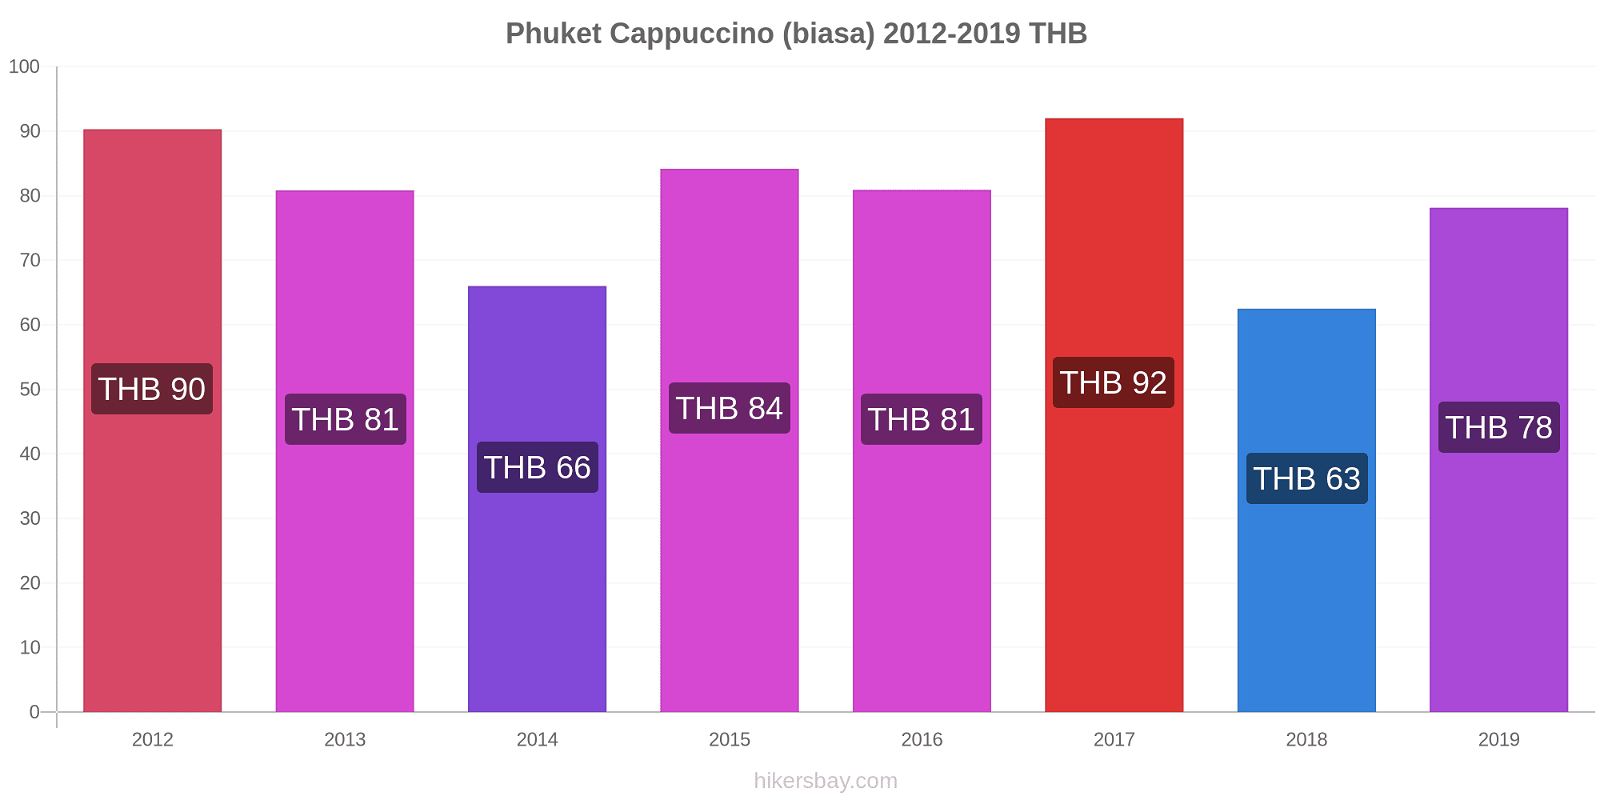 Phuket perubahan harga Cappuccino (biasa) hikersbay.com